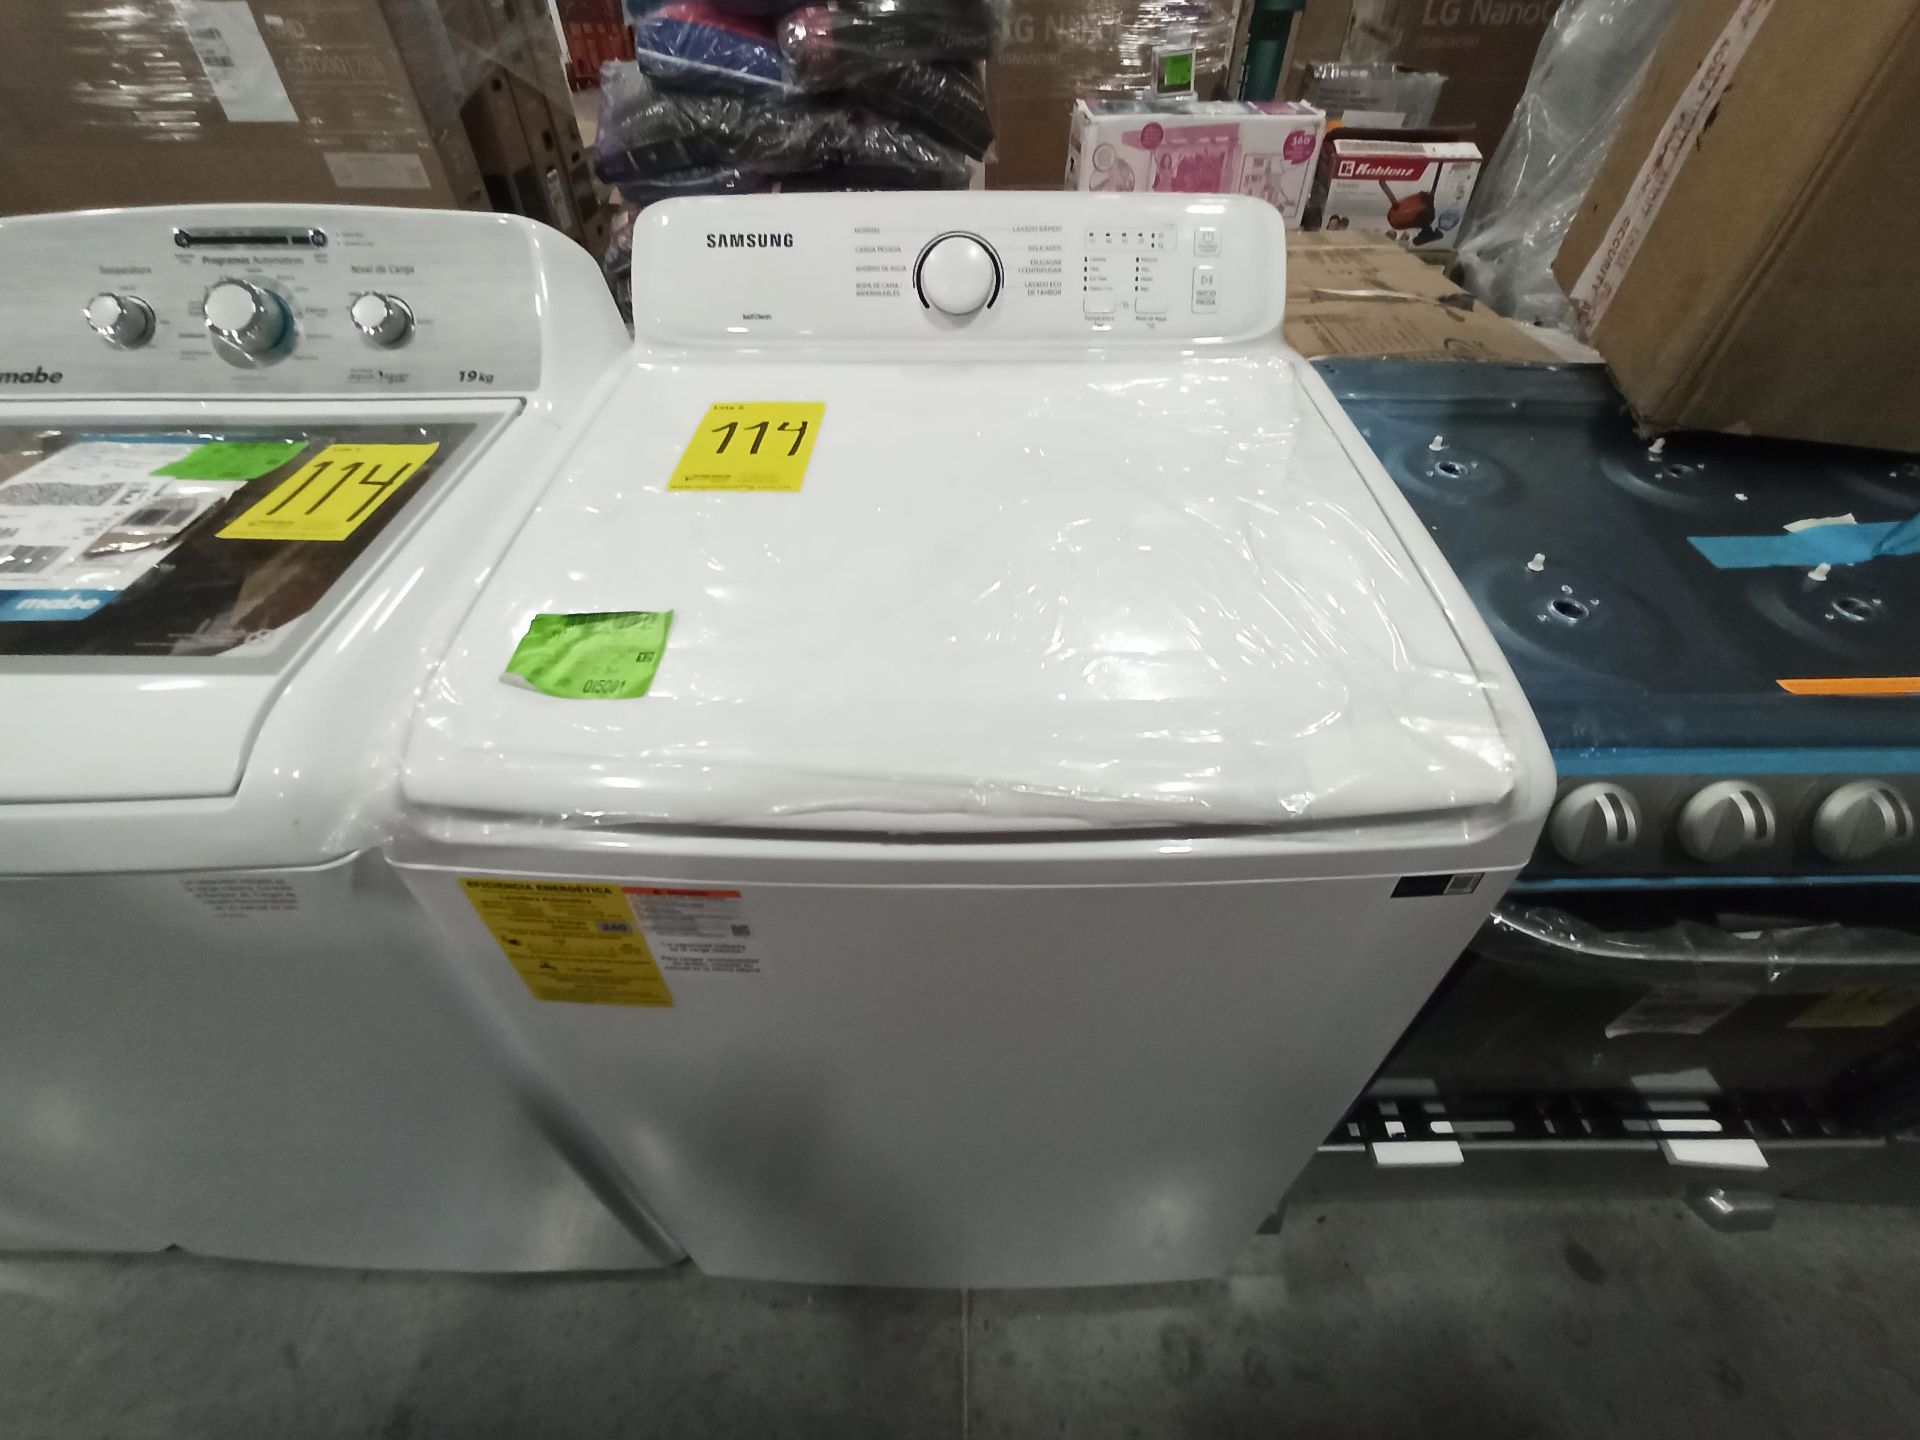 Lote de 2 lavadoras contiene: 1 Lavadora de 20 KG Marca SAMSUNG, Modelo WA20A3350GW, Serie T900714E